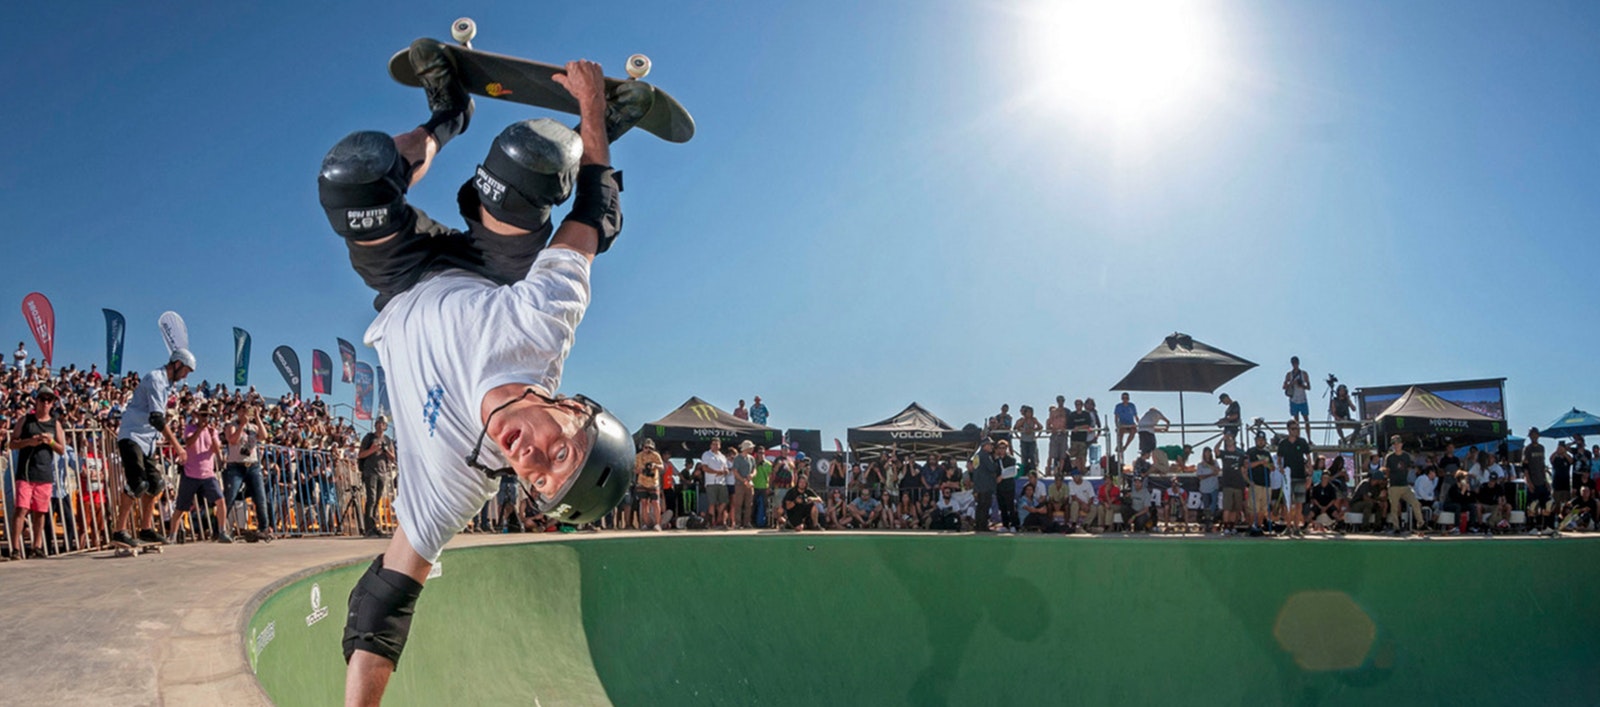 Riwayat Jatuh Bangun Tony Hawk Menekuni Olahraga Skateboard